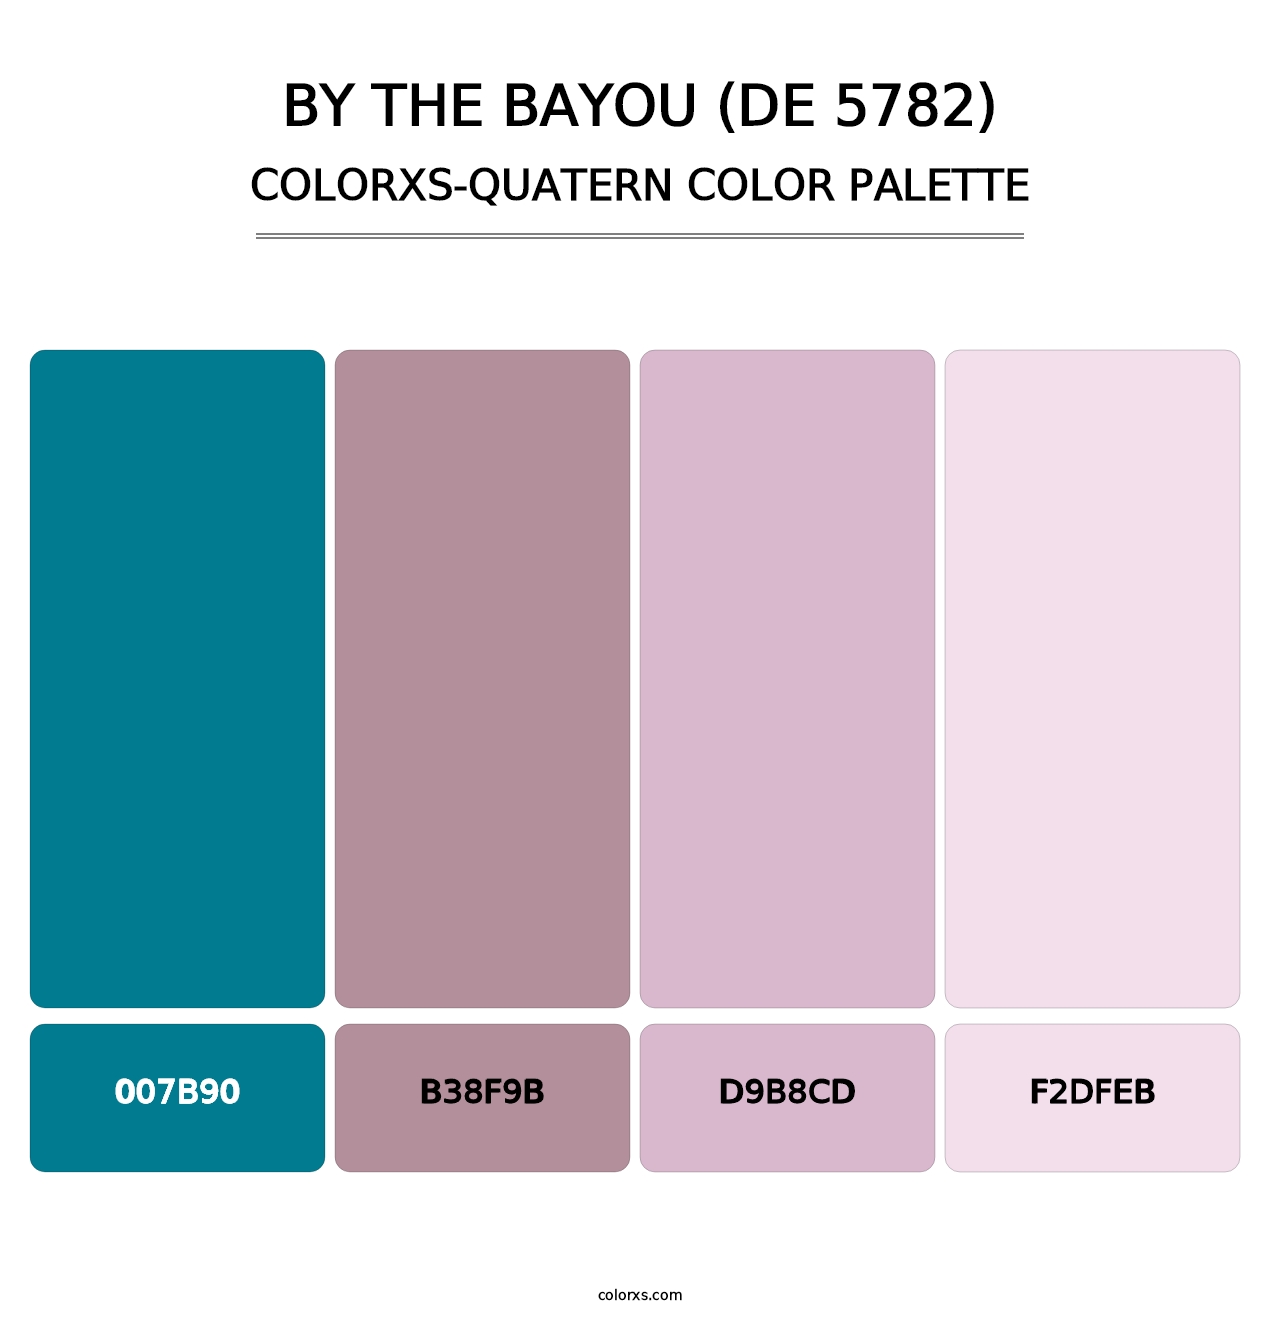 By the Bayou (DE 5782) - Colorxs Quatern Palette